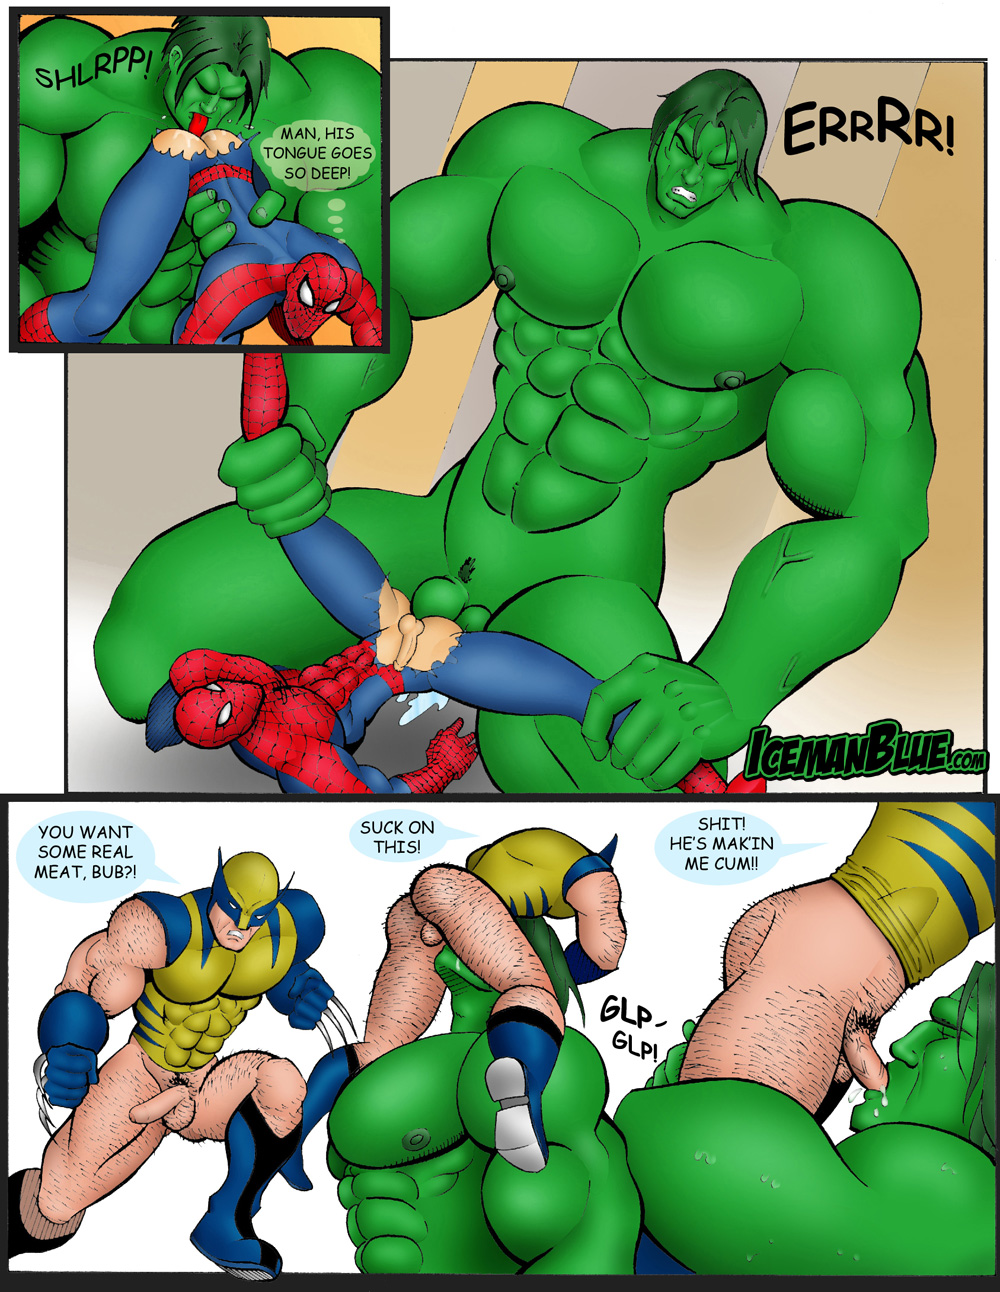 Read [iceman Blue] Hulk In Heat Hentai Online Porn Manga And Doujinshi